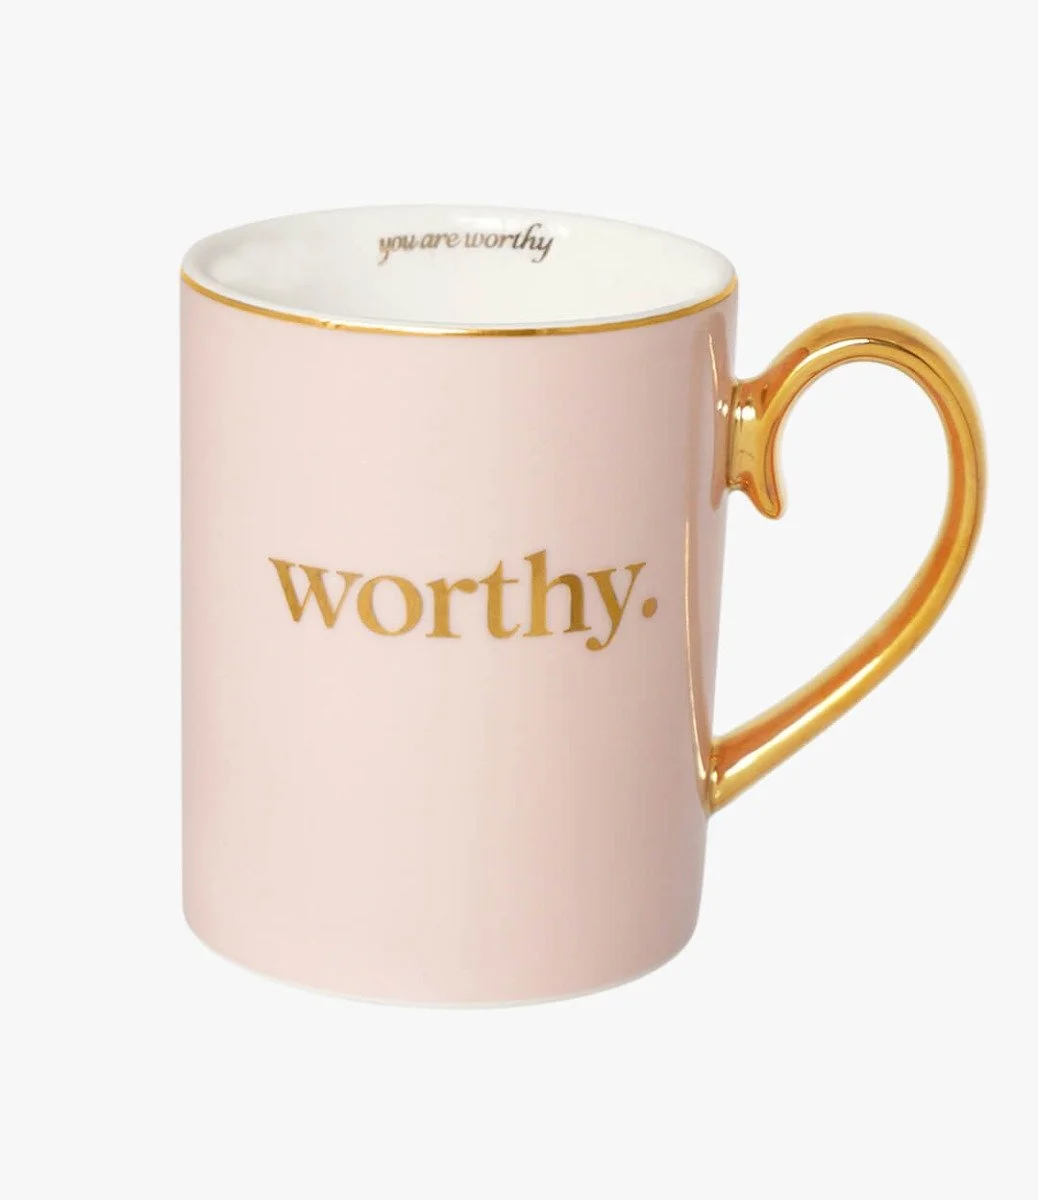 Worthy - Mug By Cristina Re